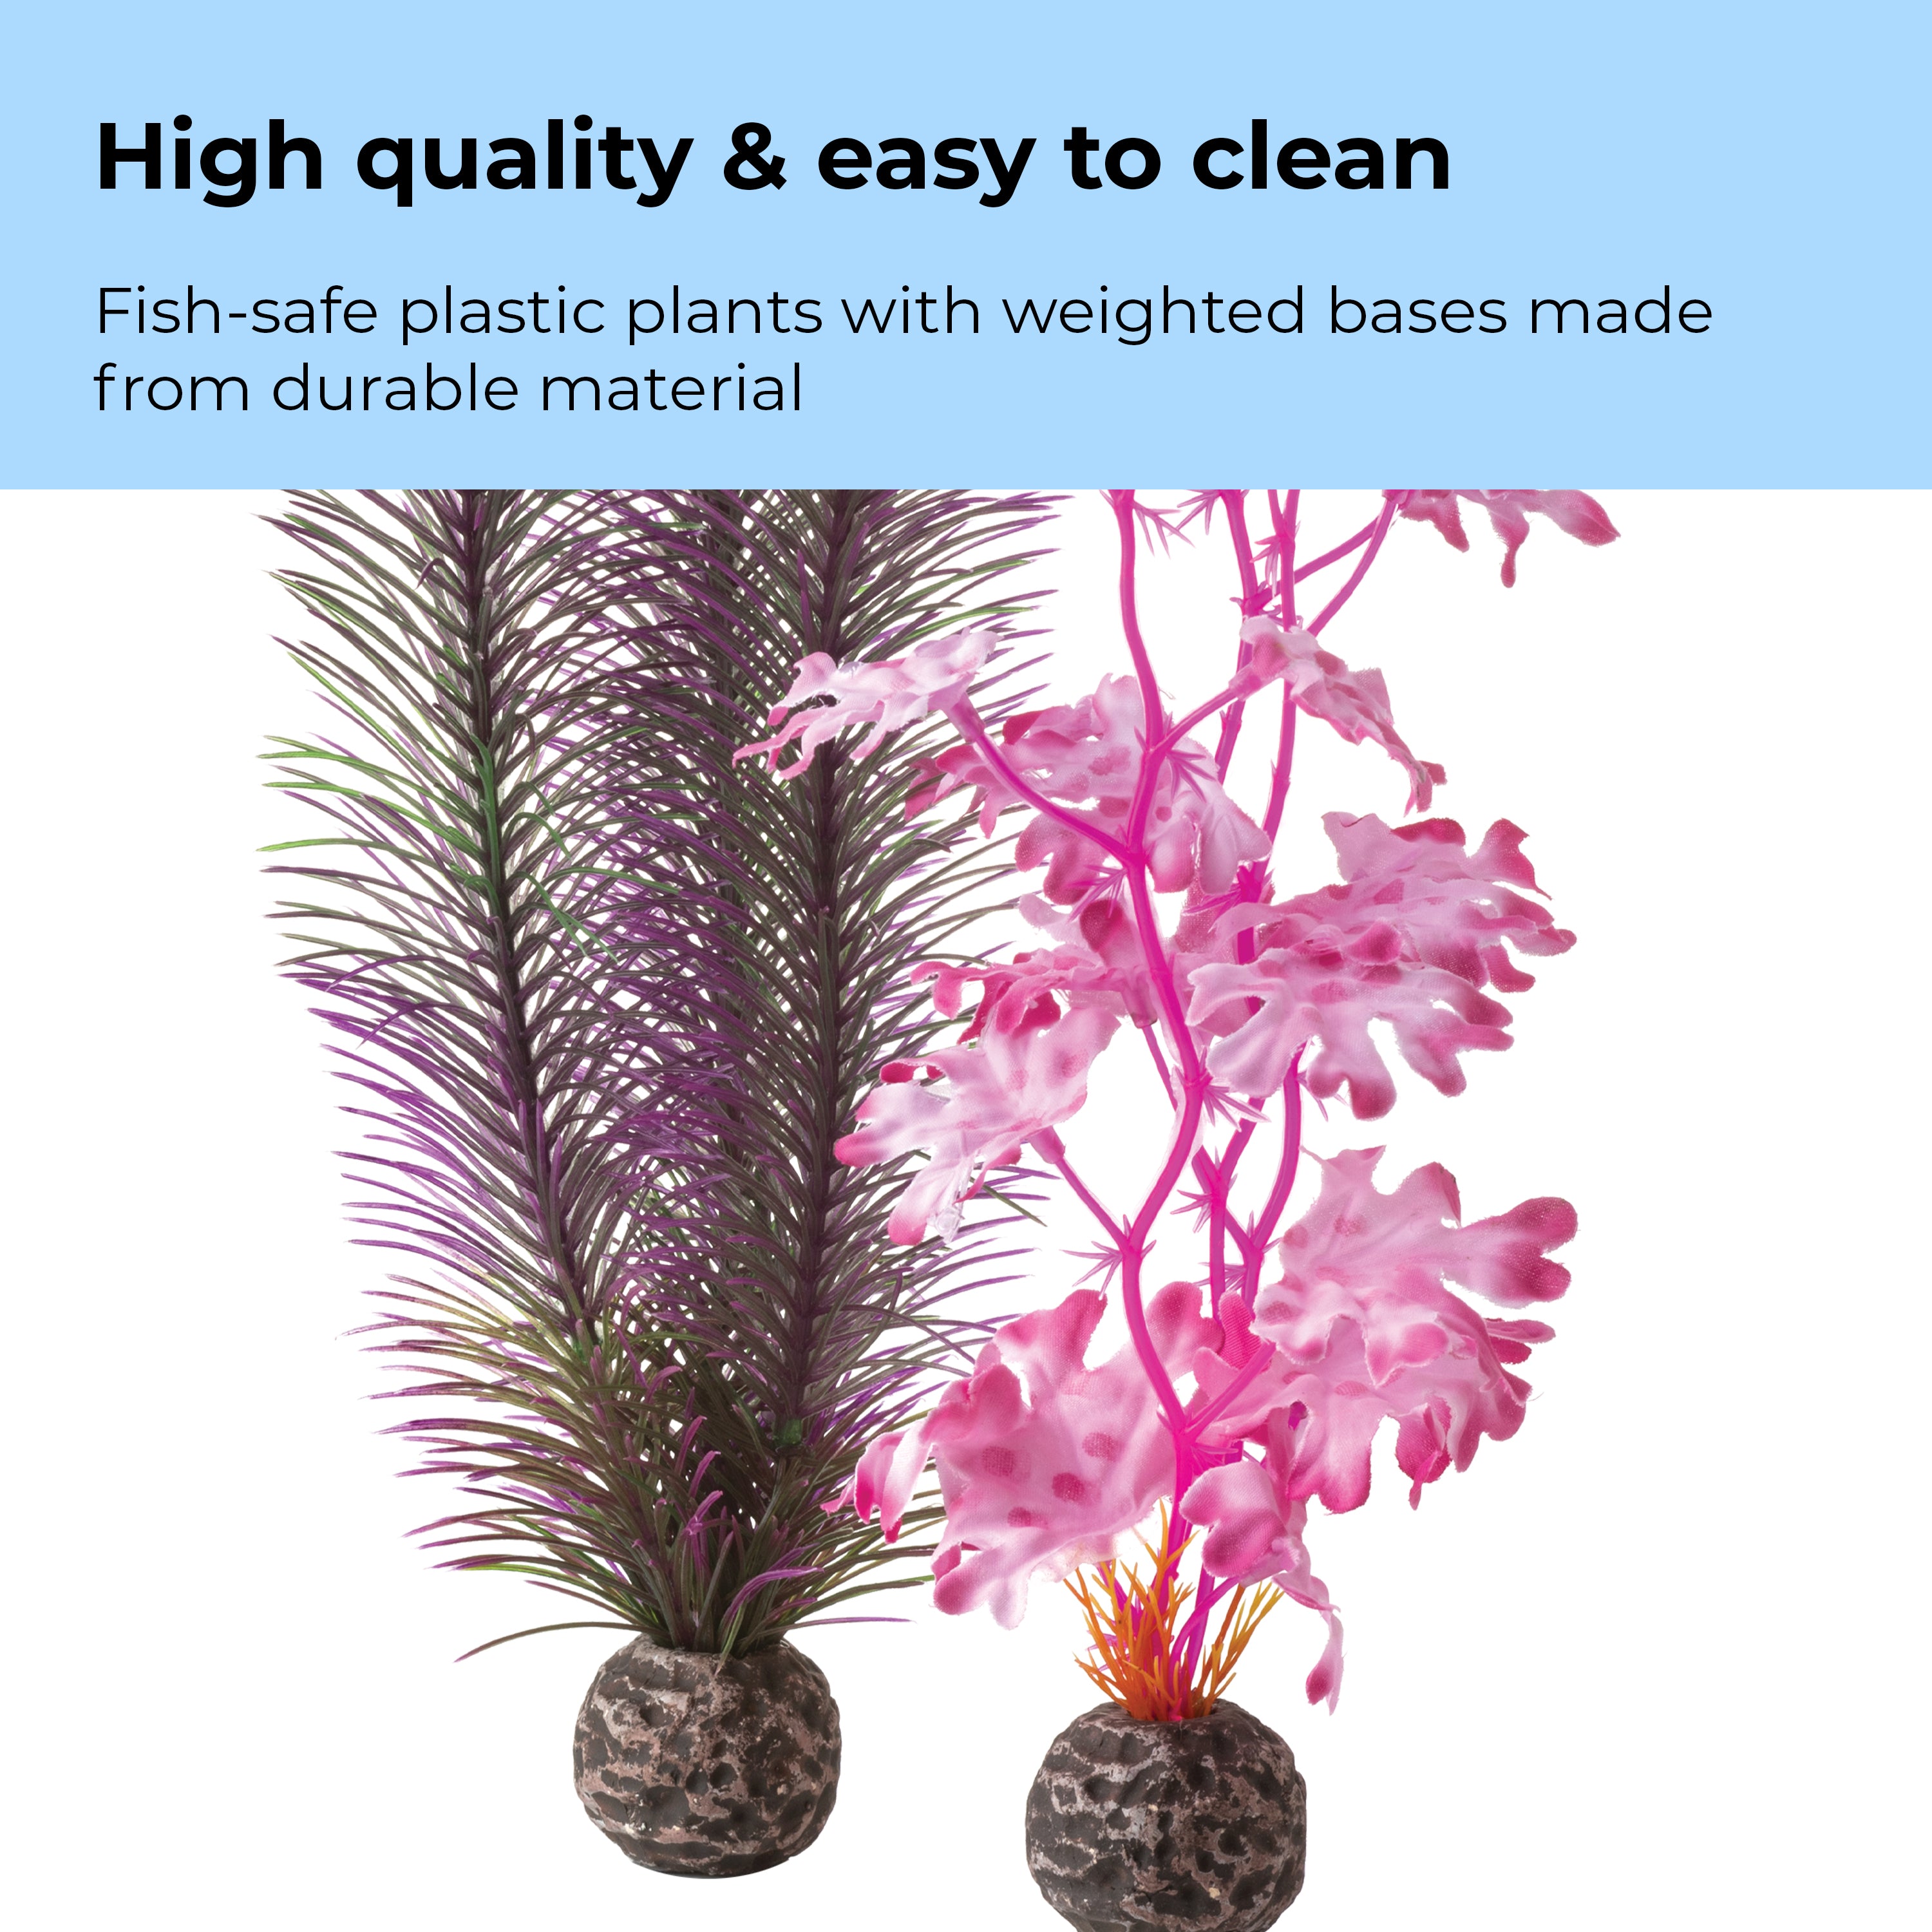 Medium Kelp Plant Set - High quality & easy to clean